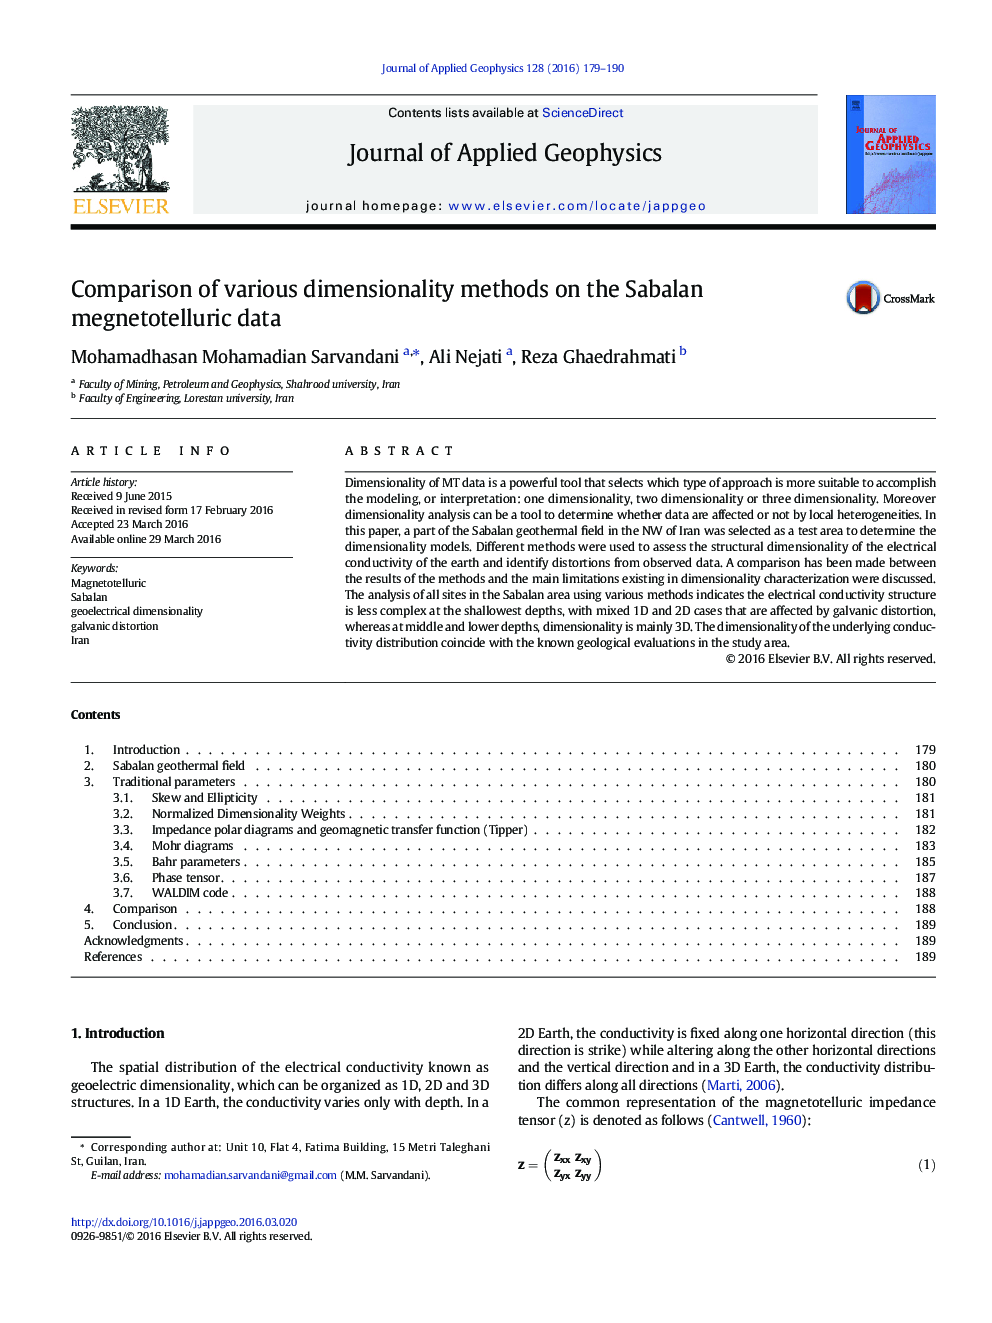 Comparison of various dimensionality methods on the Sabalan megnetotelluric data